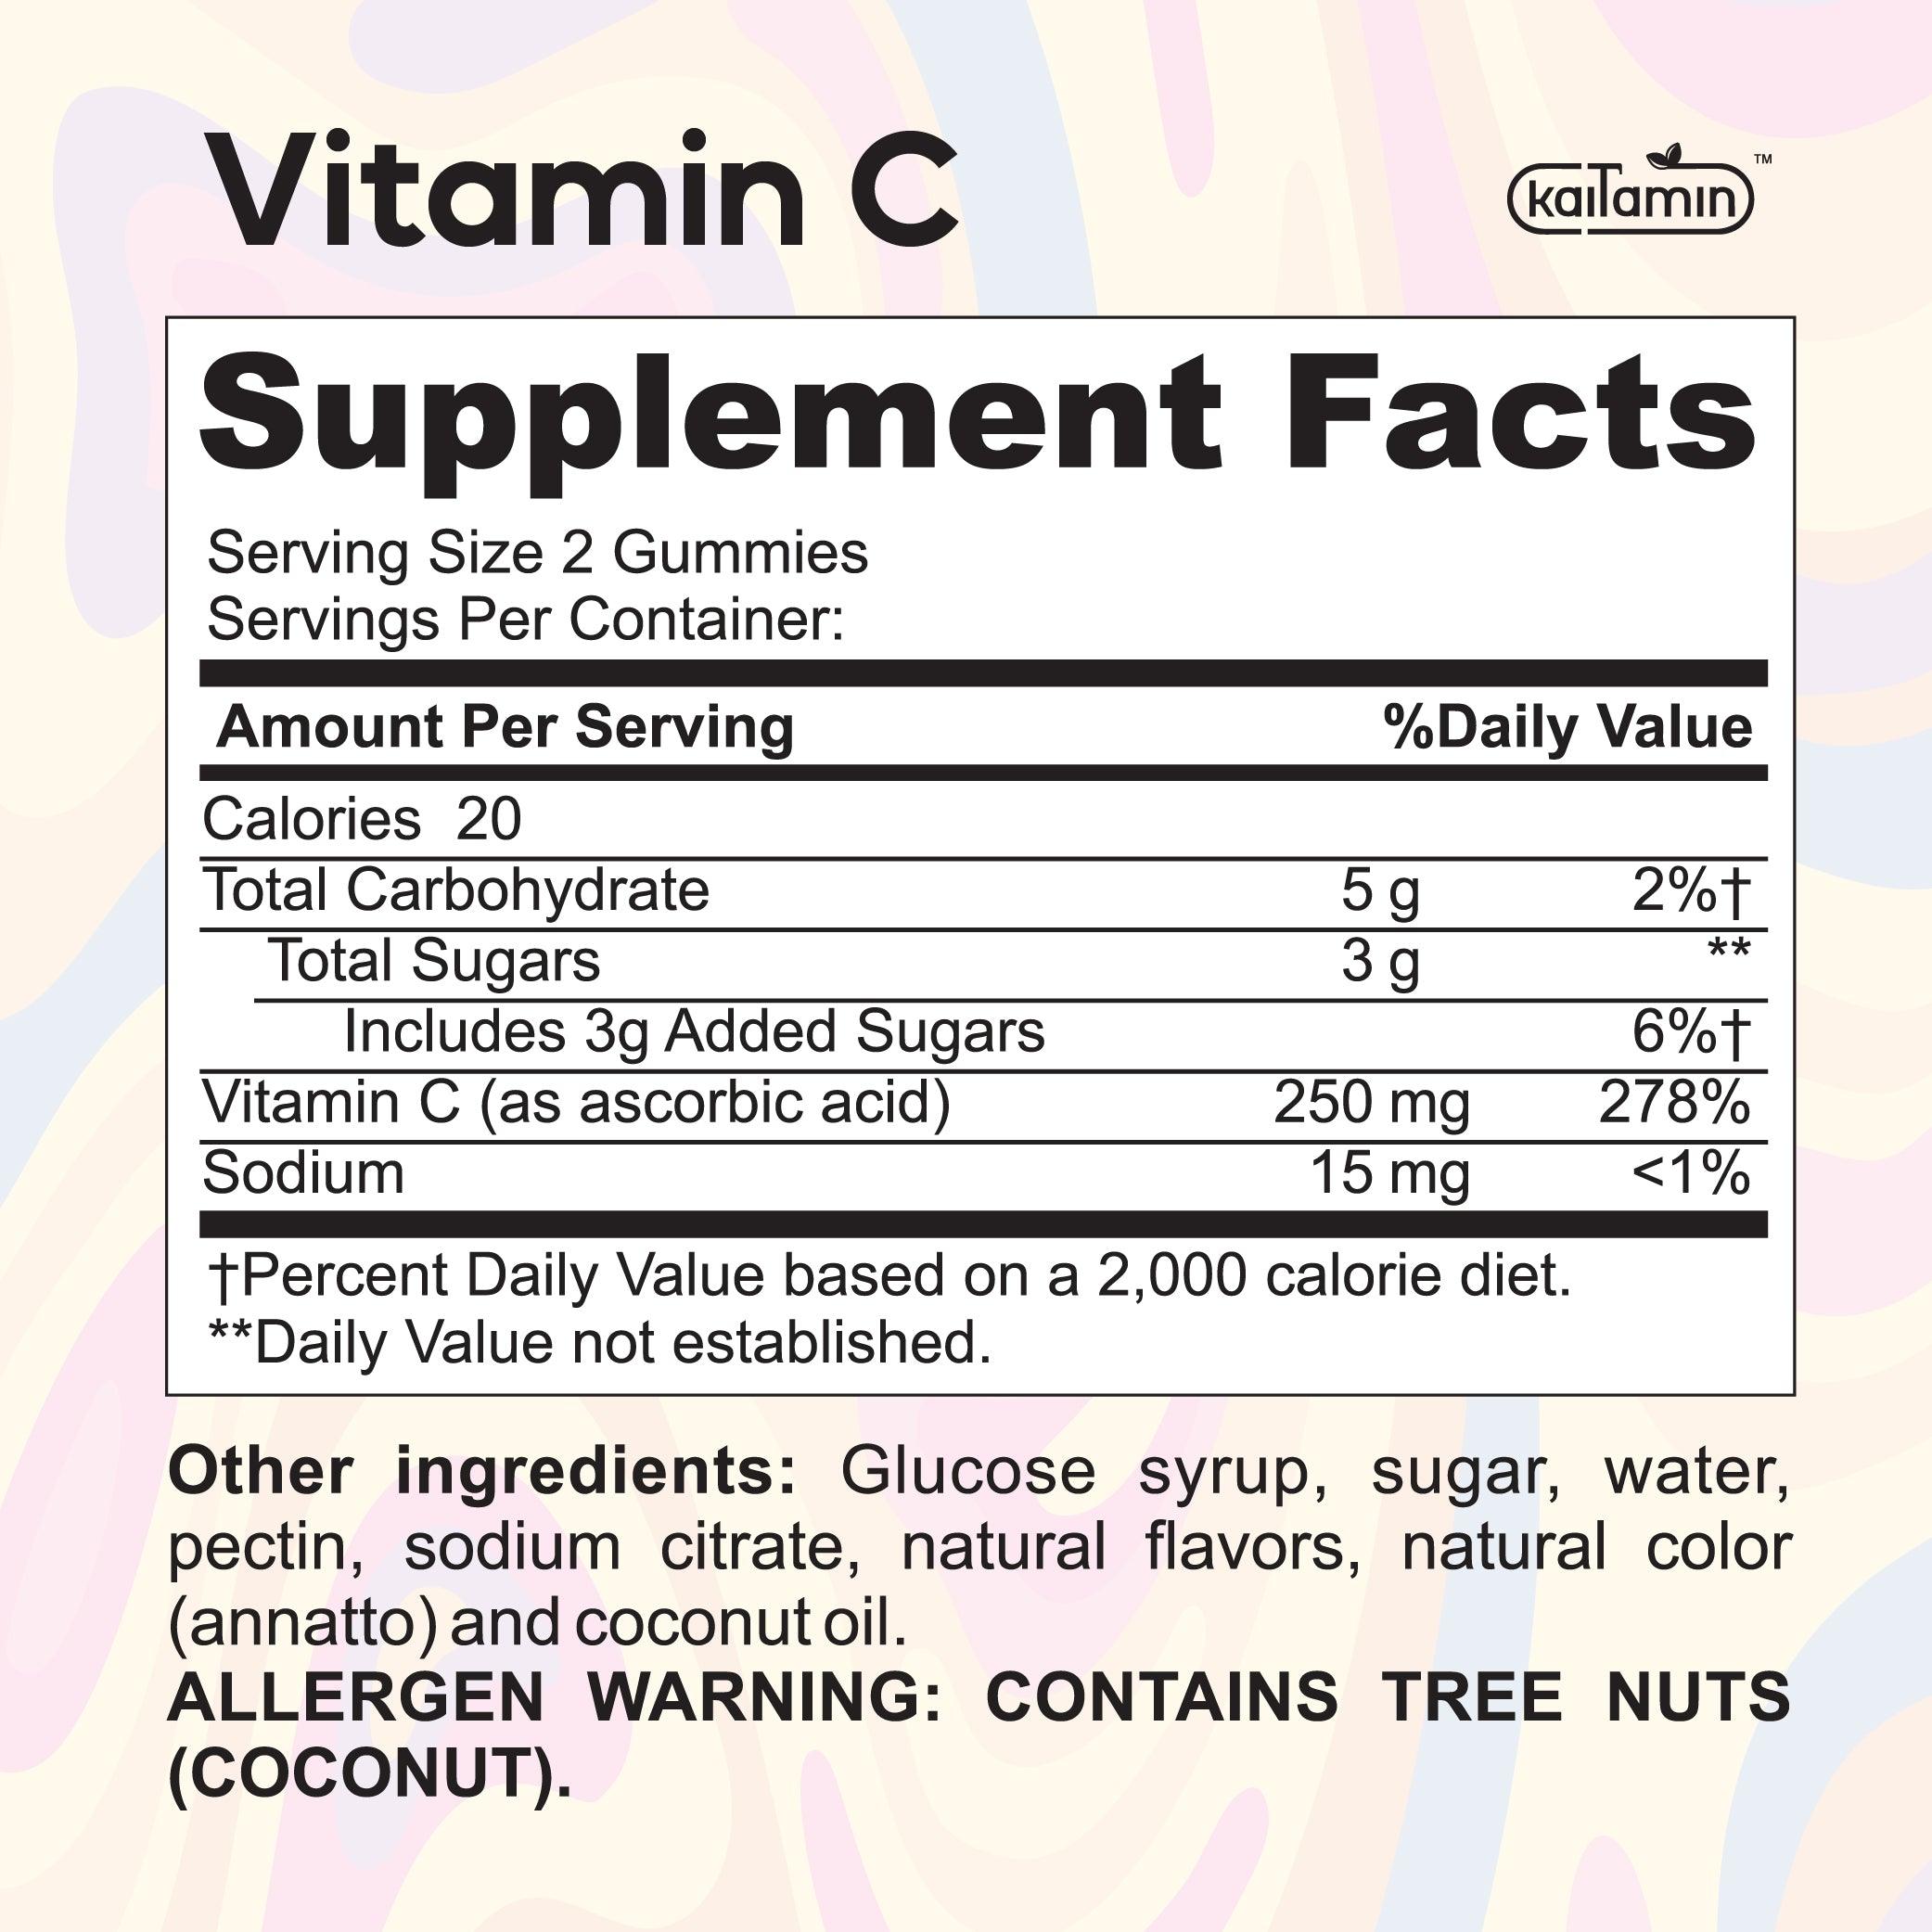 Vitamin C 250 Gummies - for Immunity and Growth Support - 60 Gummies - Kaitamin